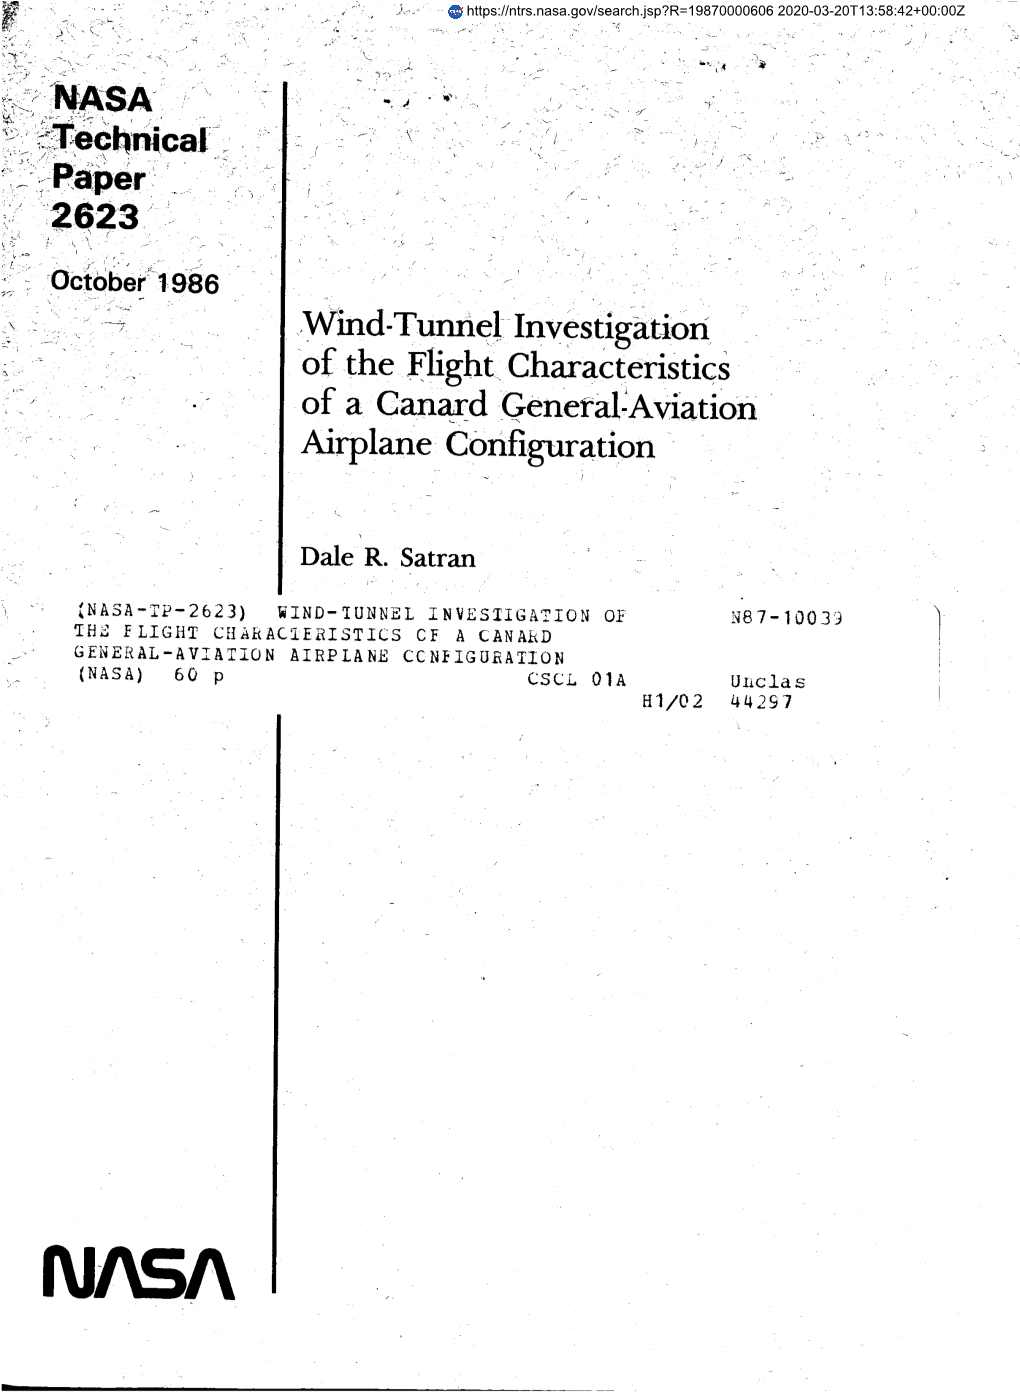 Wind-Tunnel Investigation of the Flight Chasacteristics of a Canard Genera1:Aviation Airplane Coniiguration